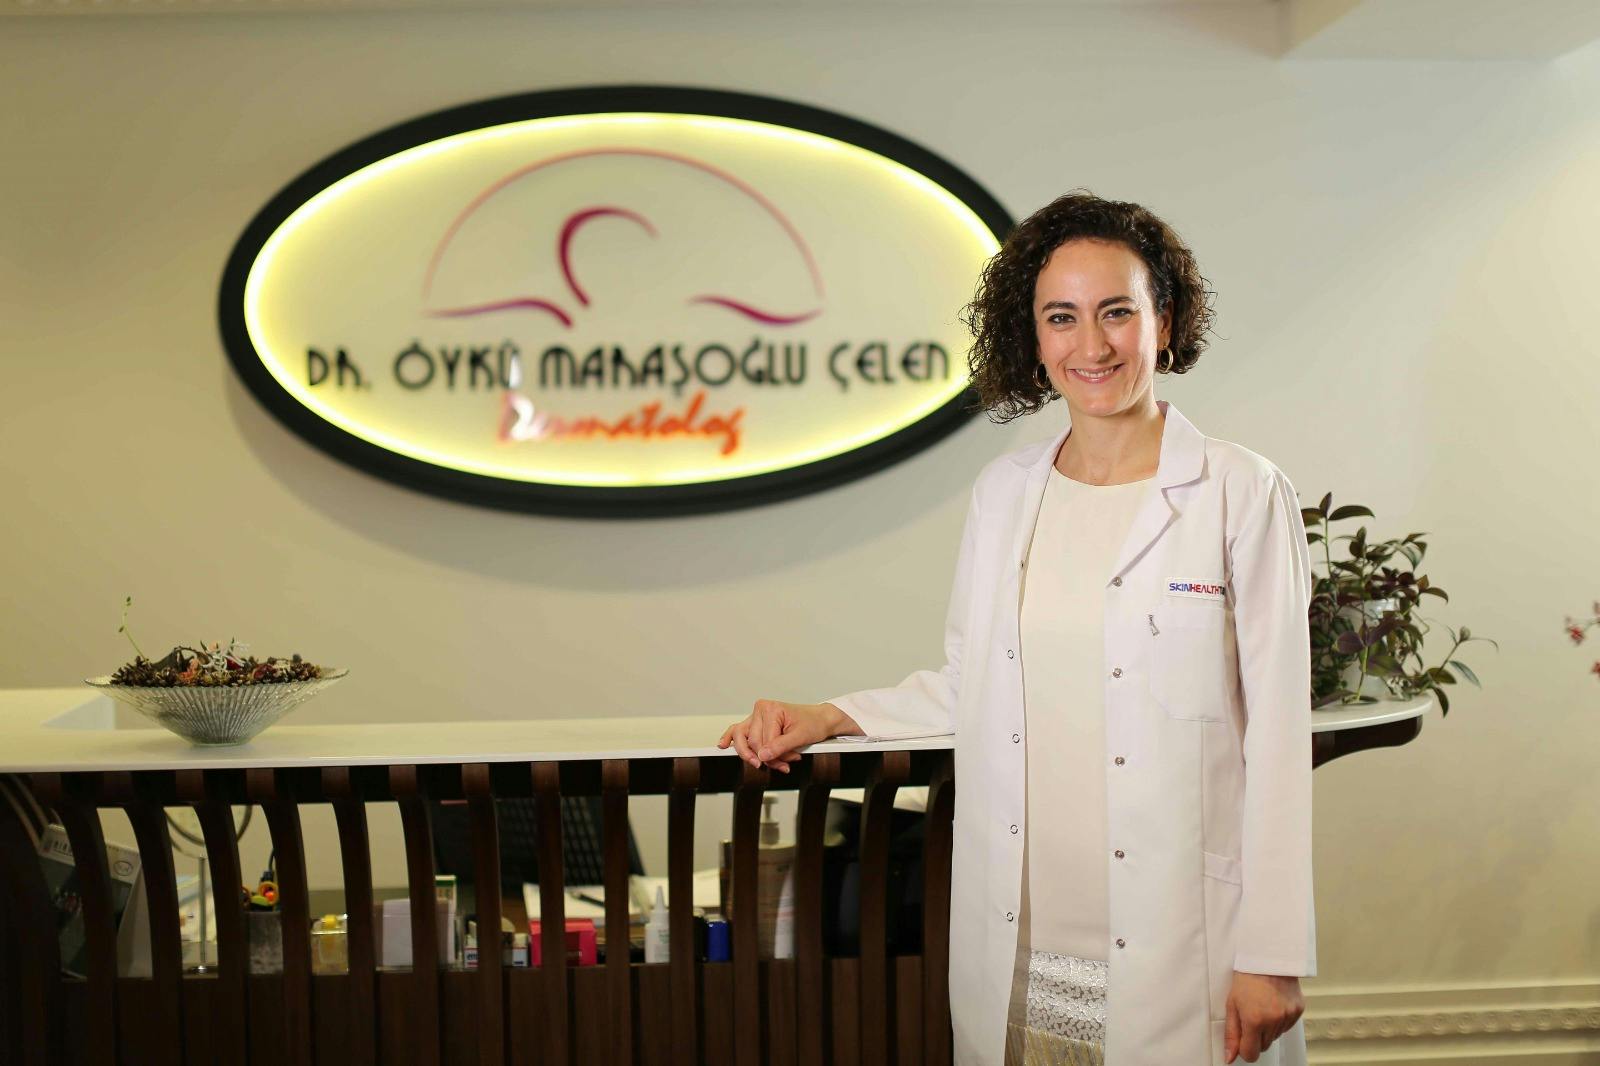 Dr. Oyku Celen Hair Transplant Clinic